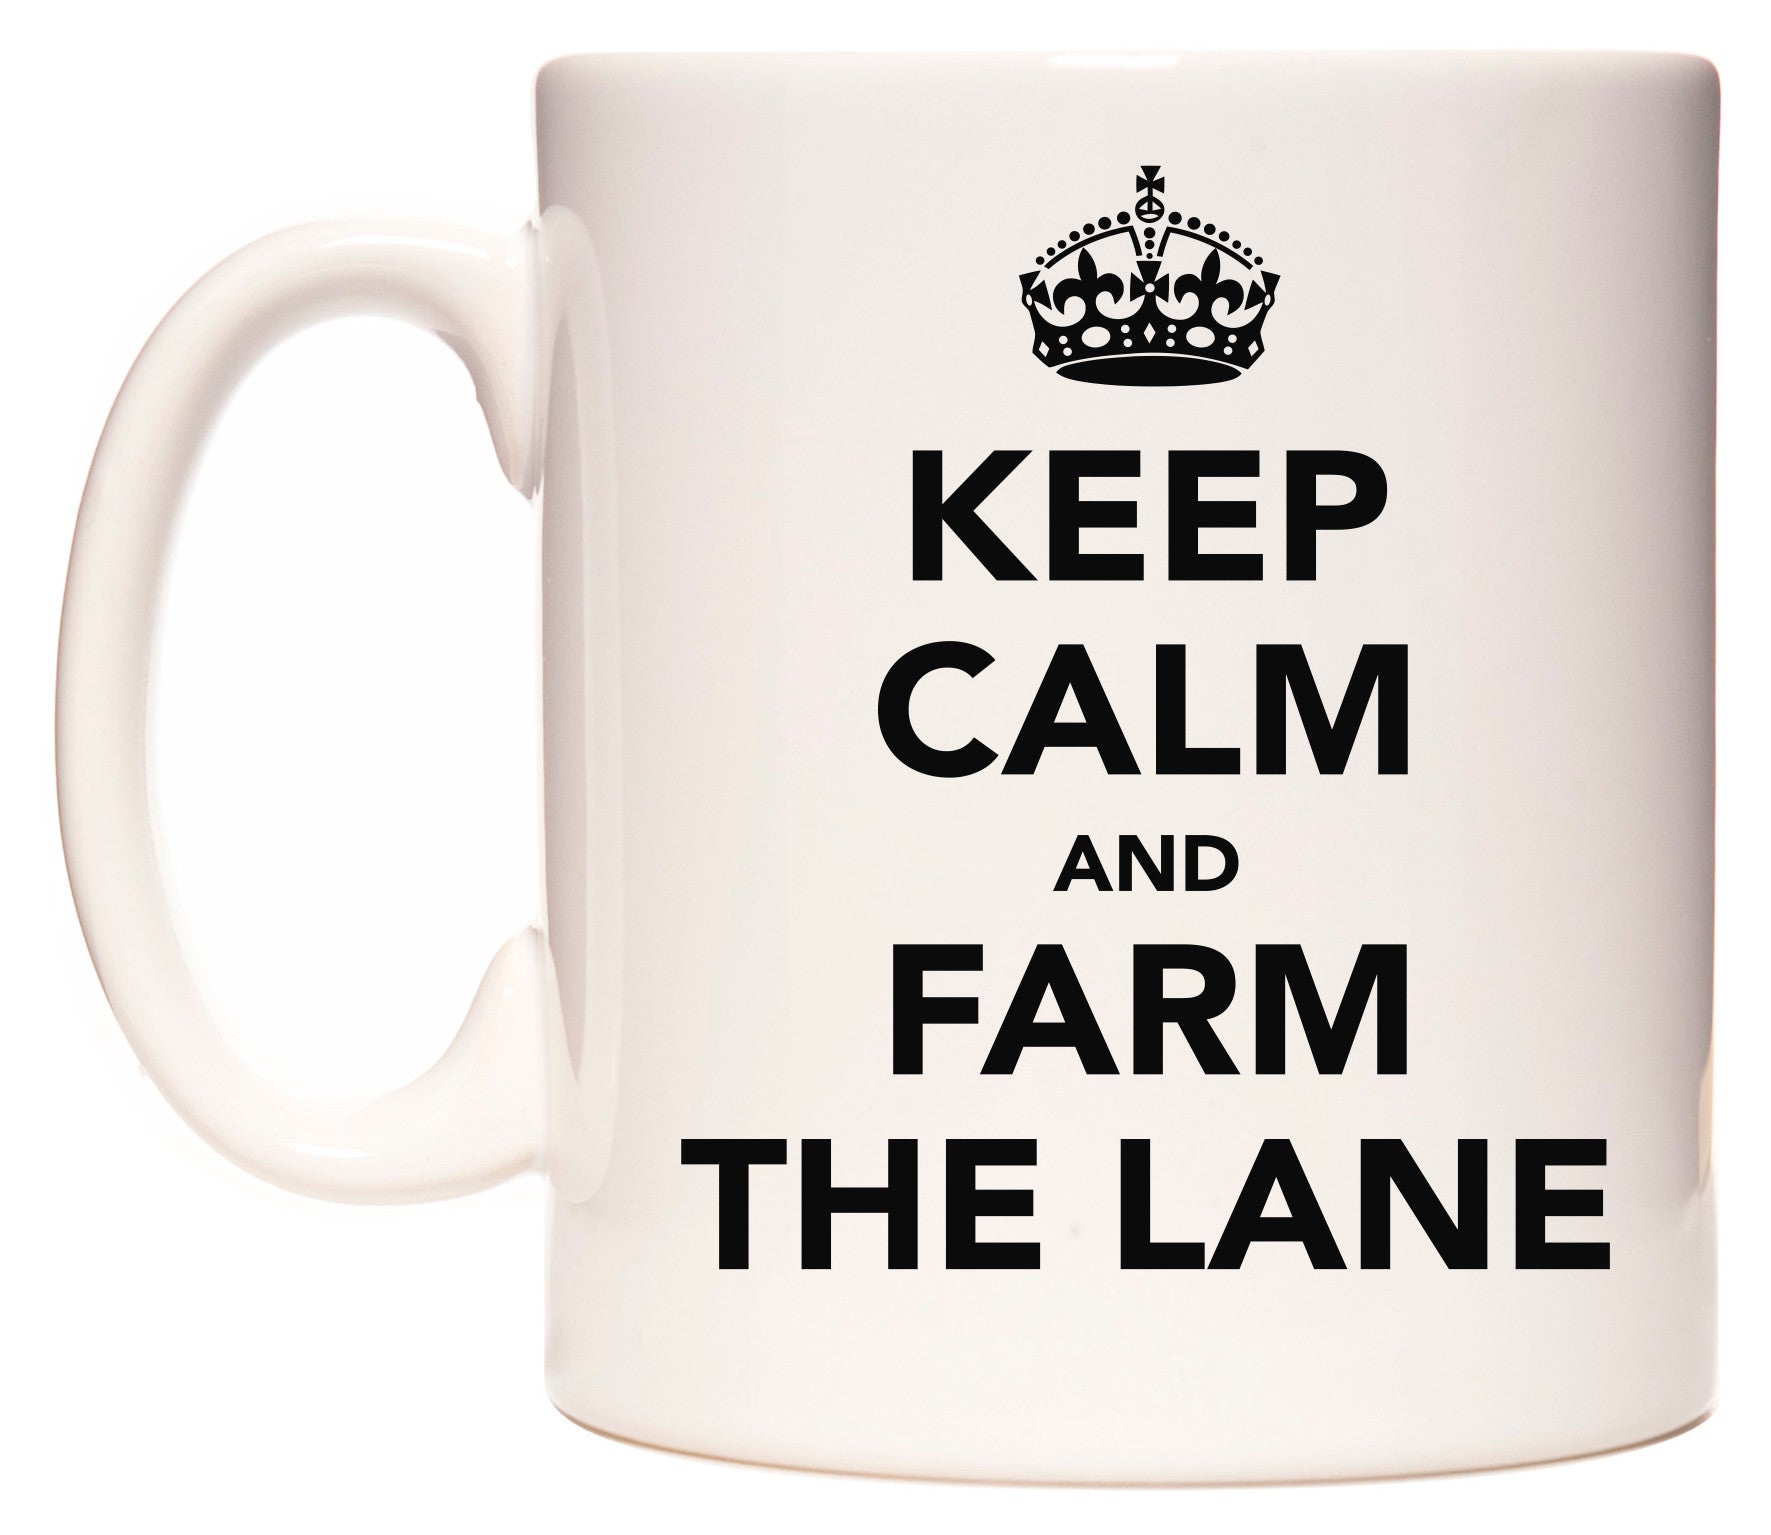 This mug features KEEP CALM AND FARM THE LANE